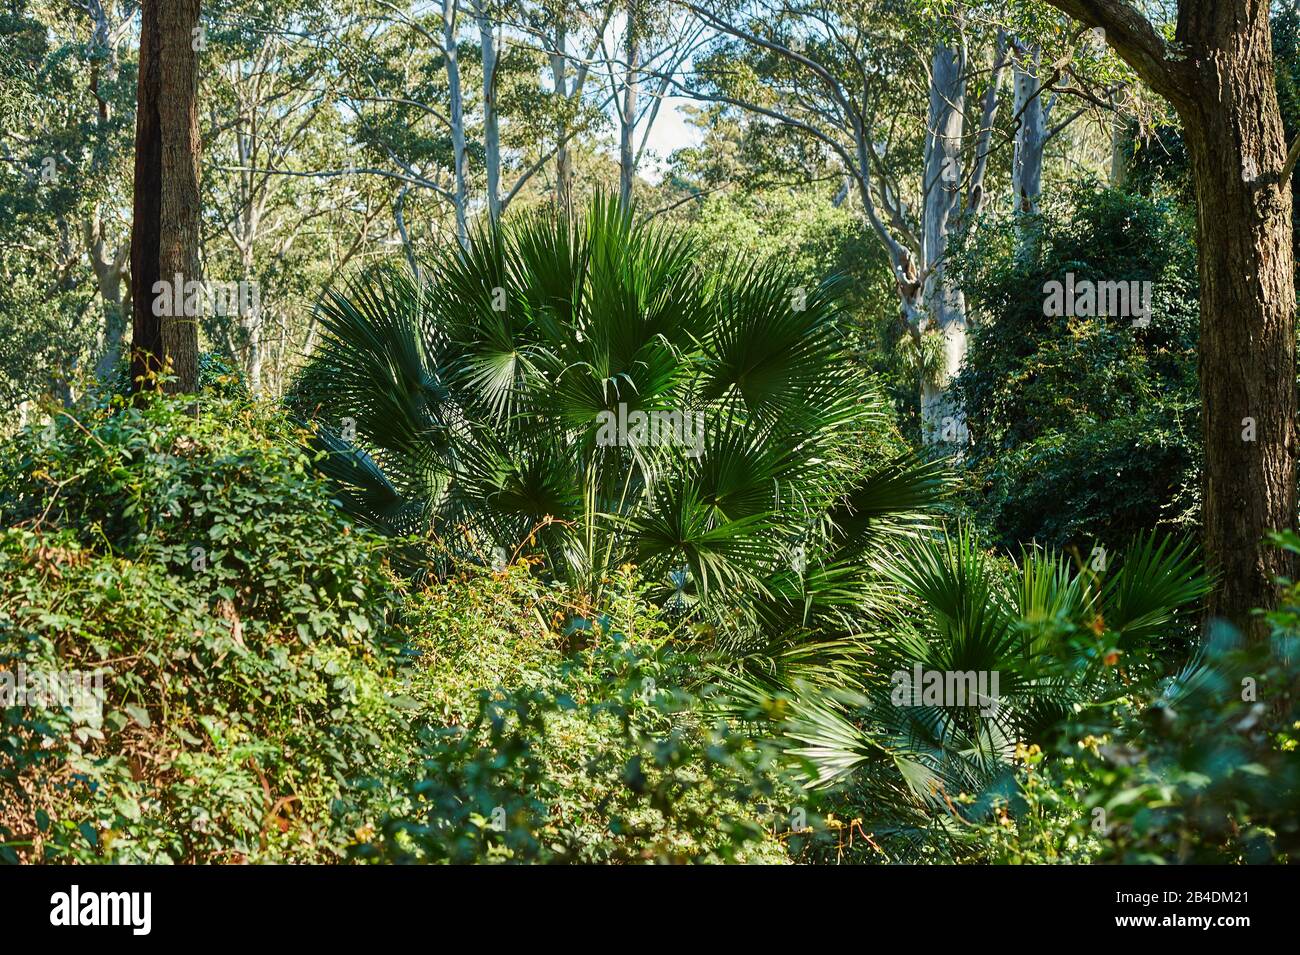 Bosque de eucaliptos (Cordillera Eucalyptus) con palma paraguas australiana (Livistona australis) en primavera en el Parque Nacional Murramarang, Nueva Gales del Sur, Australia Foto de stock